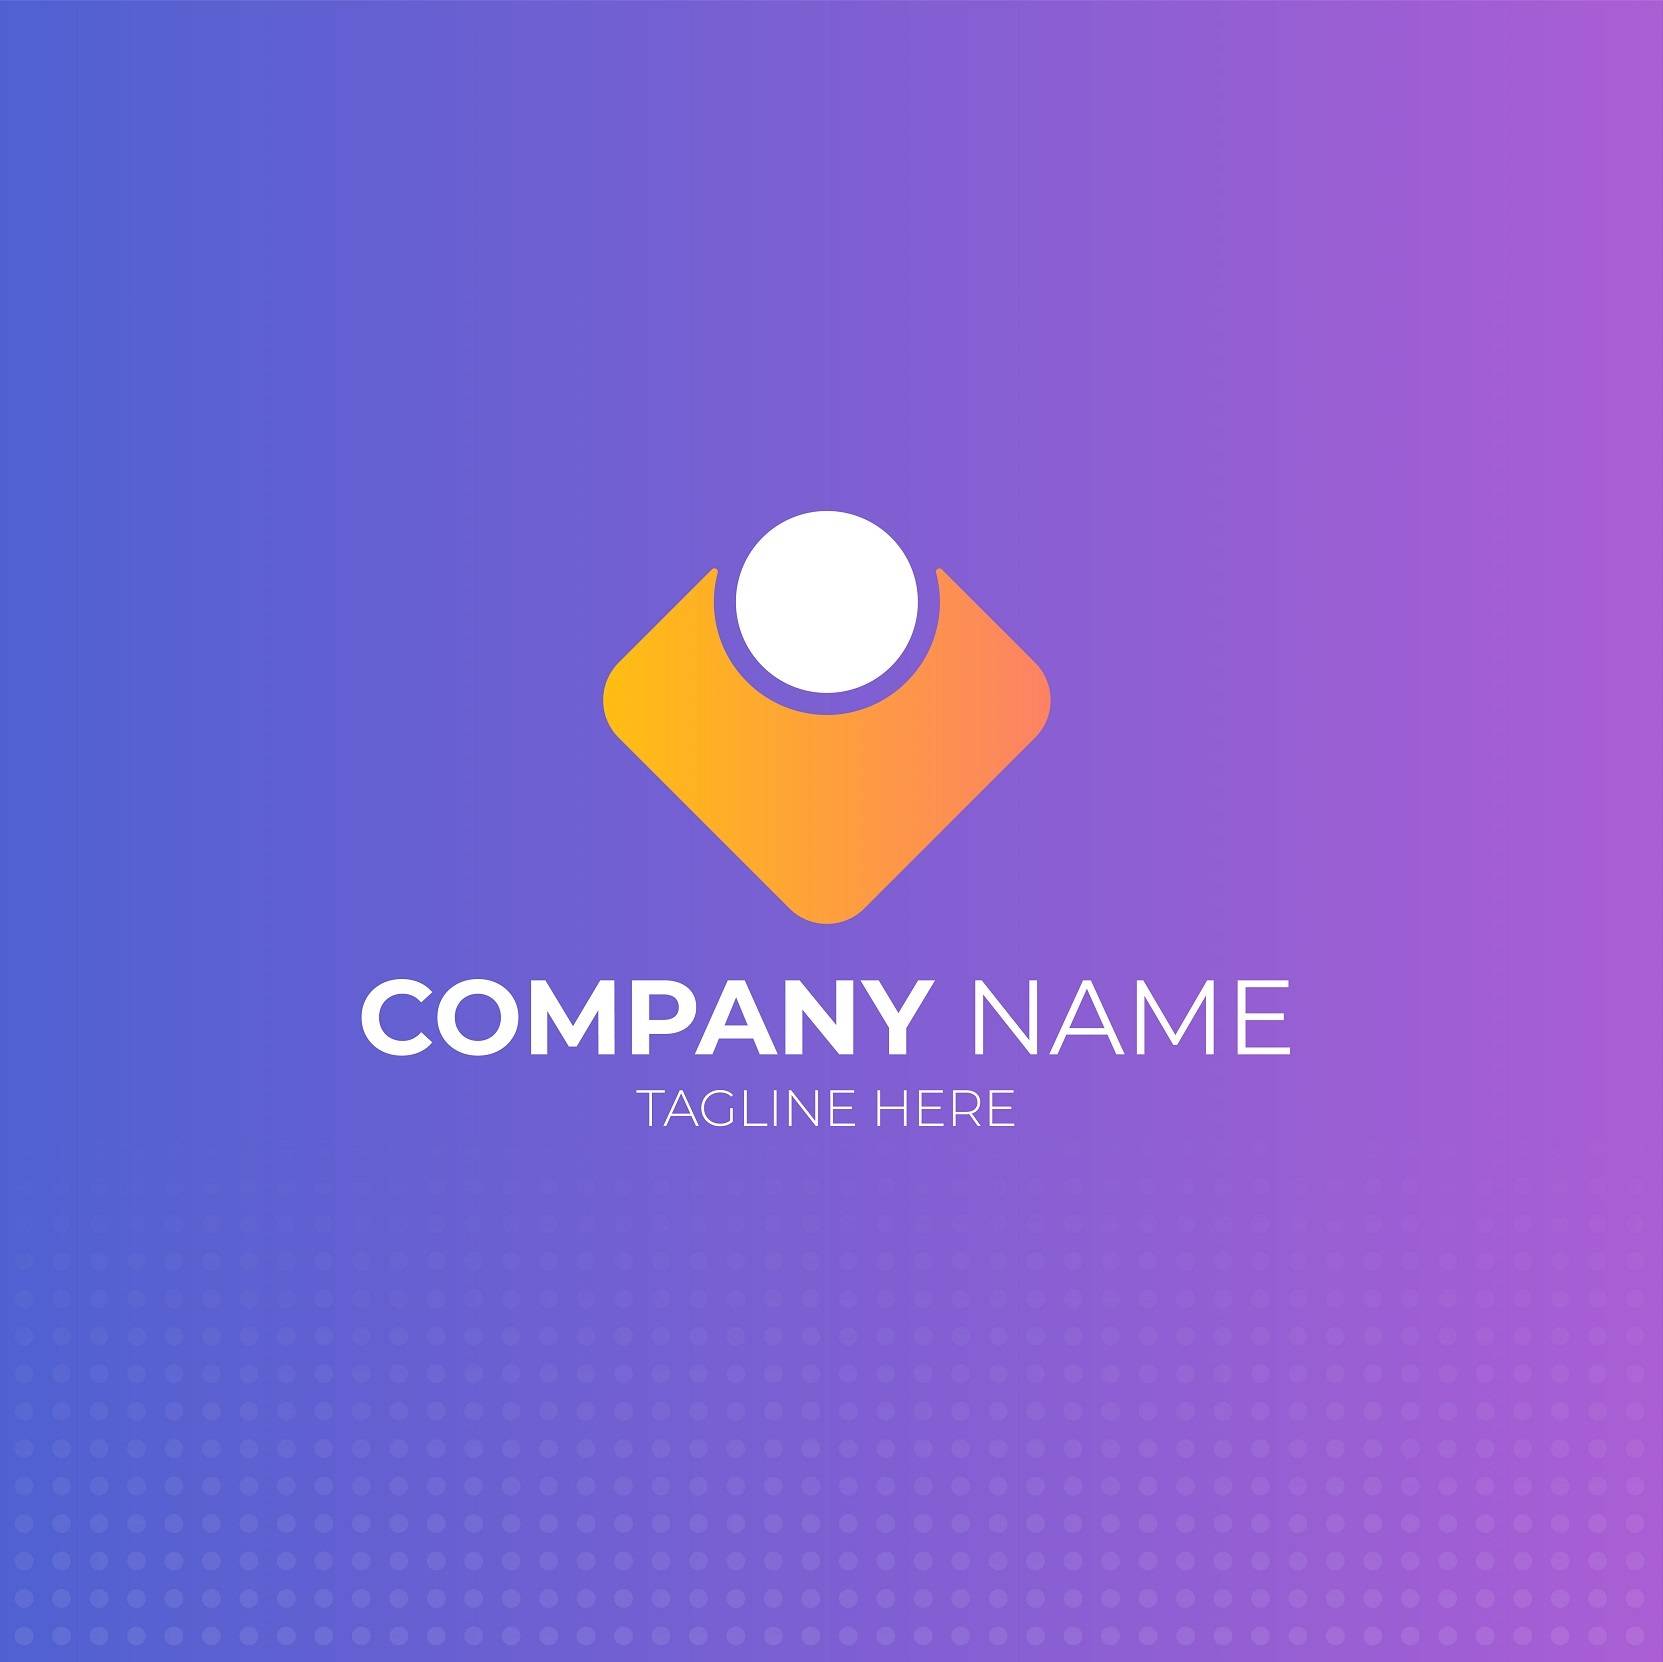 Geometric shape company logo with gradient background